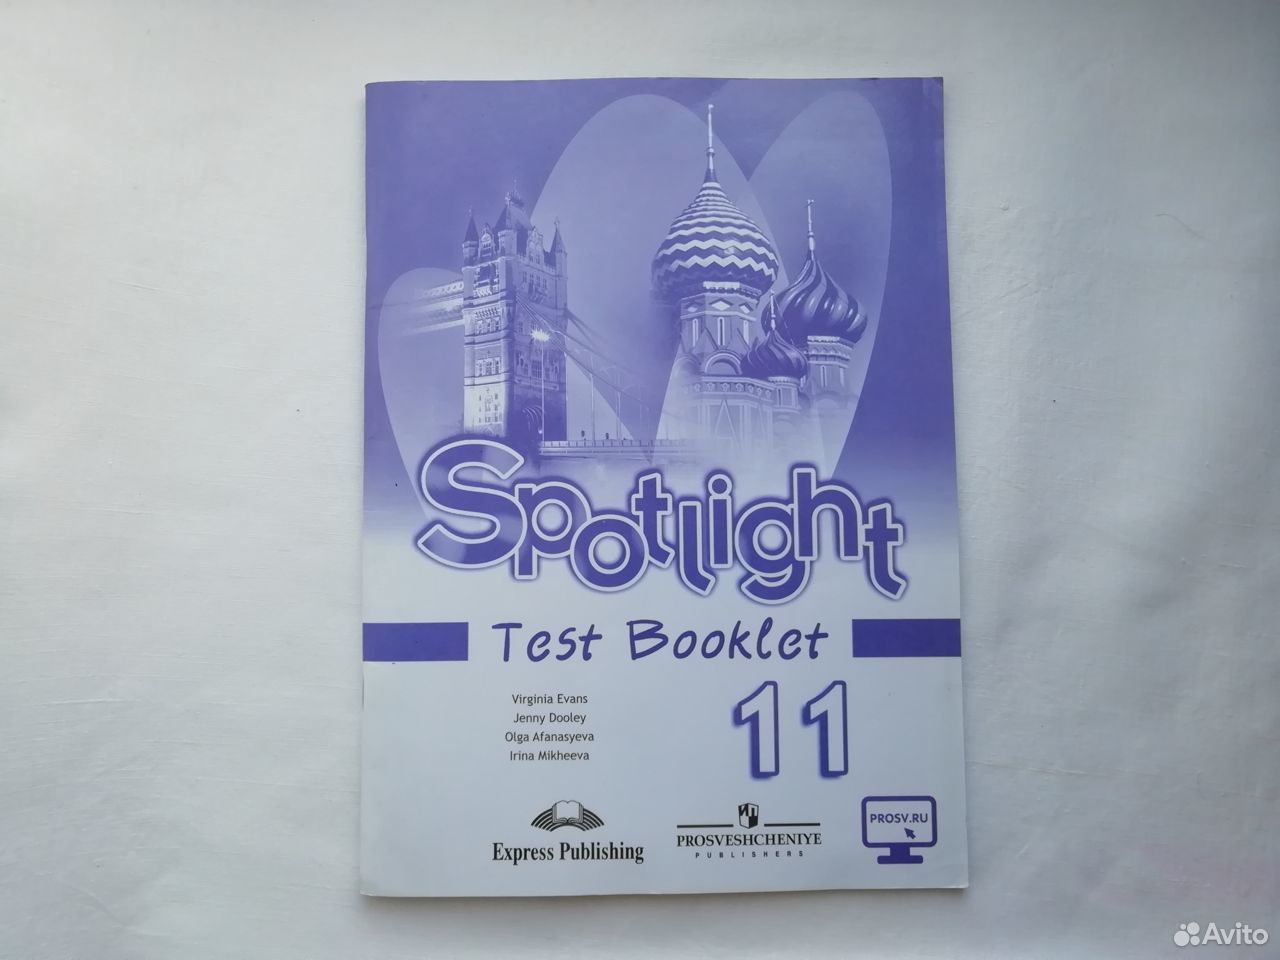 Spotlight 6 тест бук. Test booklet 11 класс Spotlight. Тест буклет 11 класс Spotlight. Спотлайт 8 тест буклет. Тест буклет спотлайт 11 класс ответы.